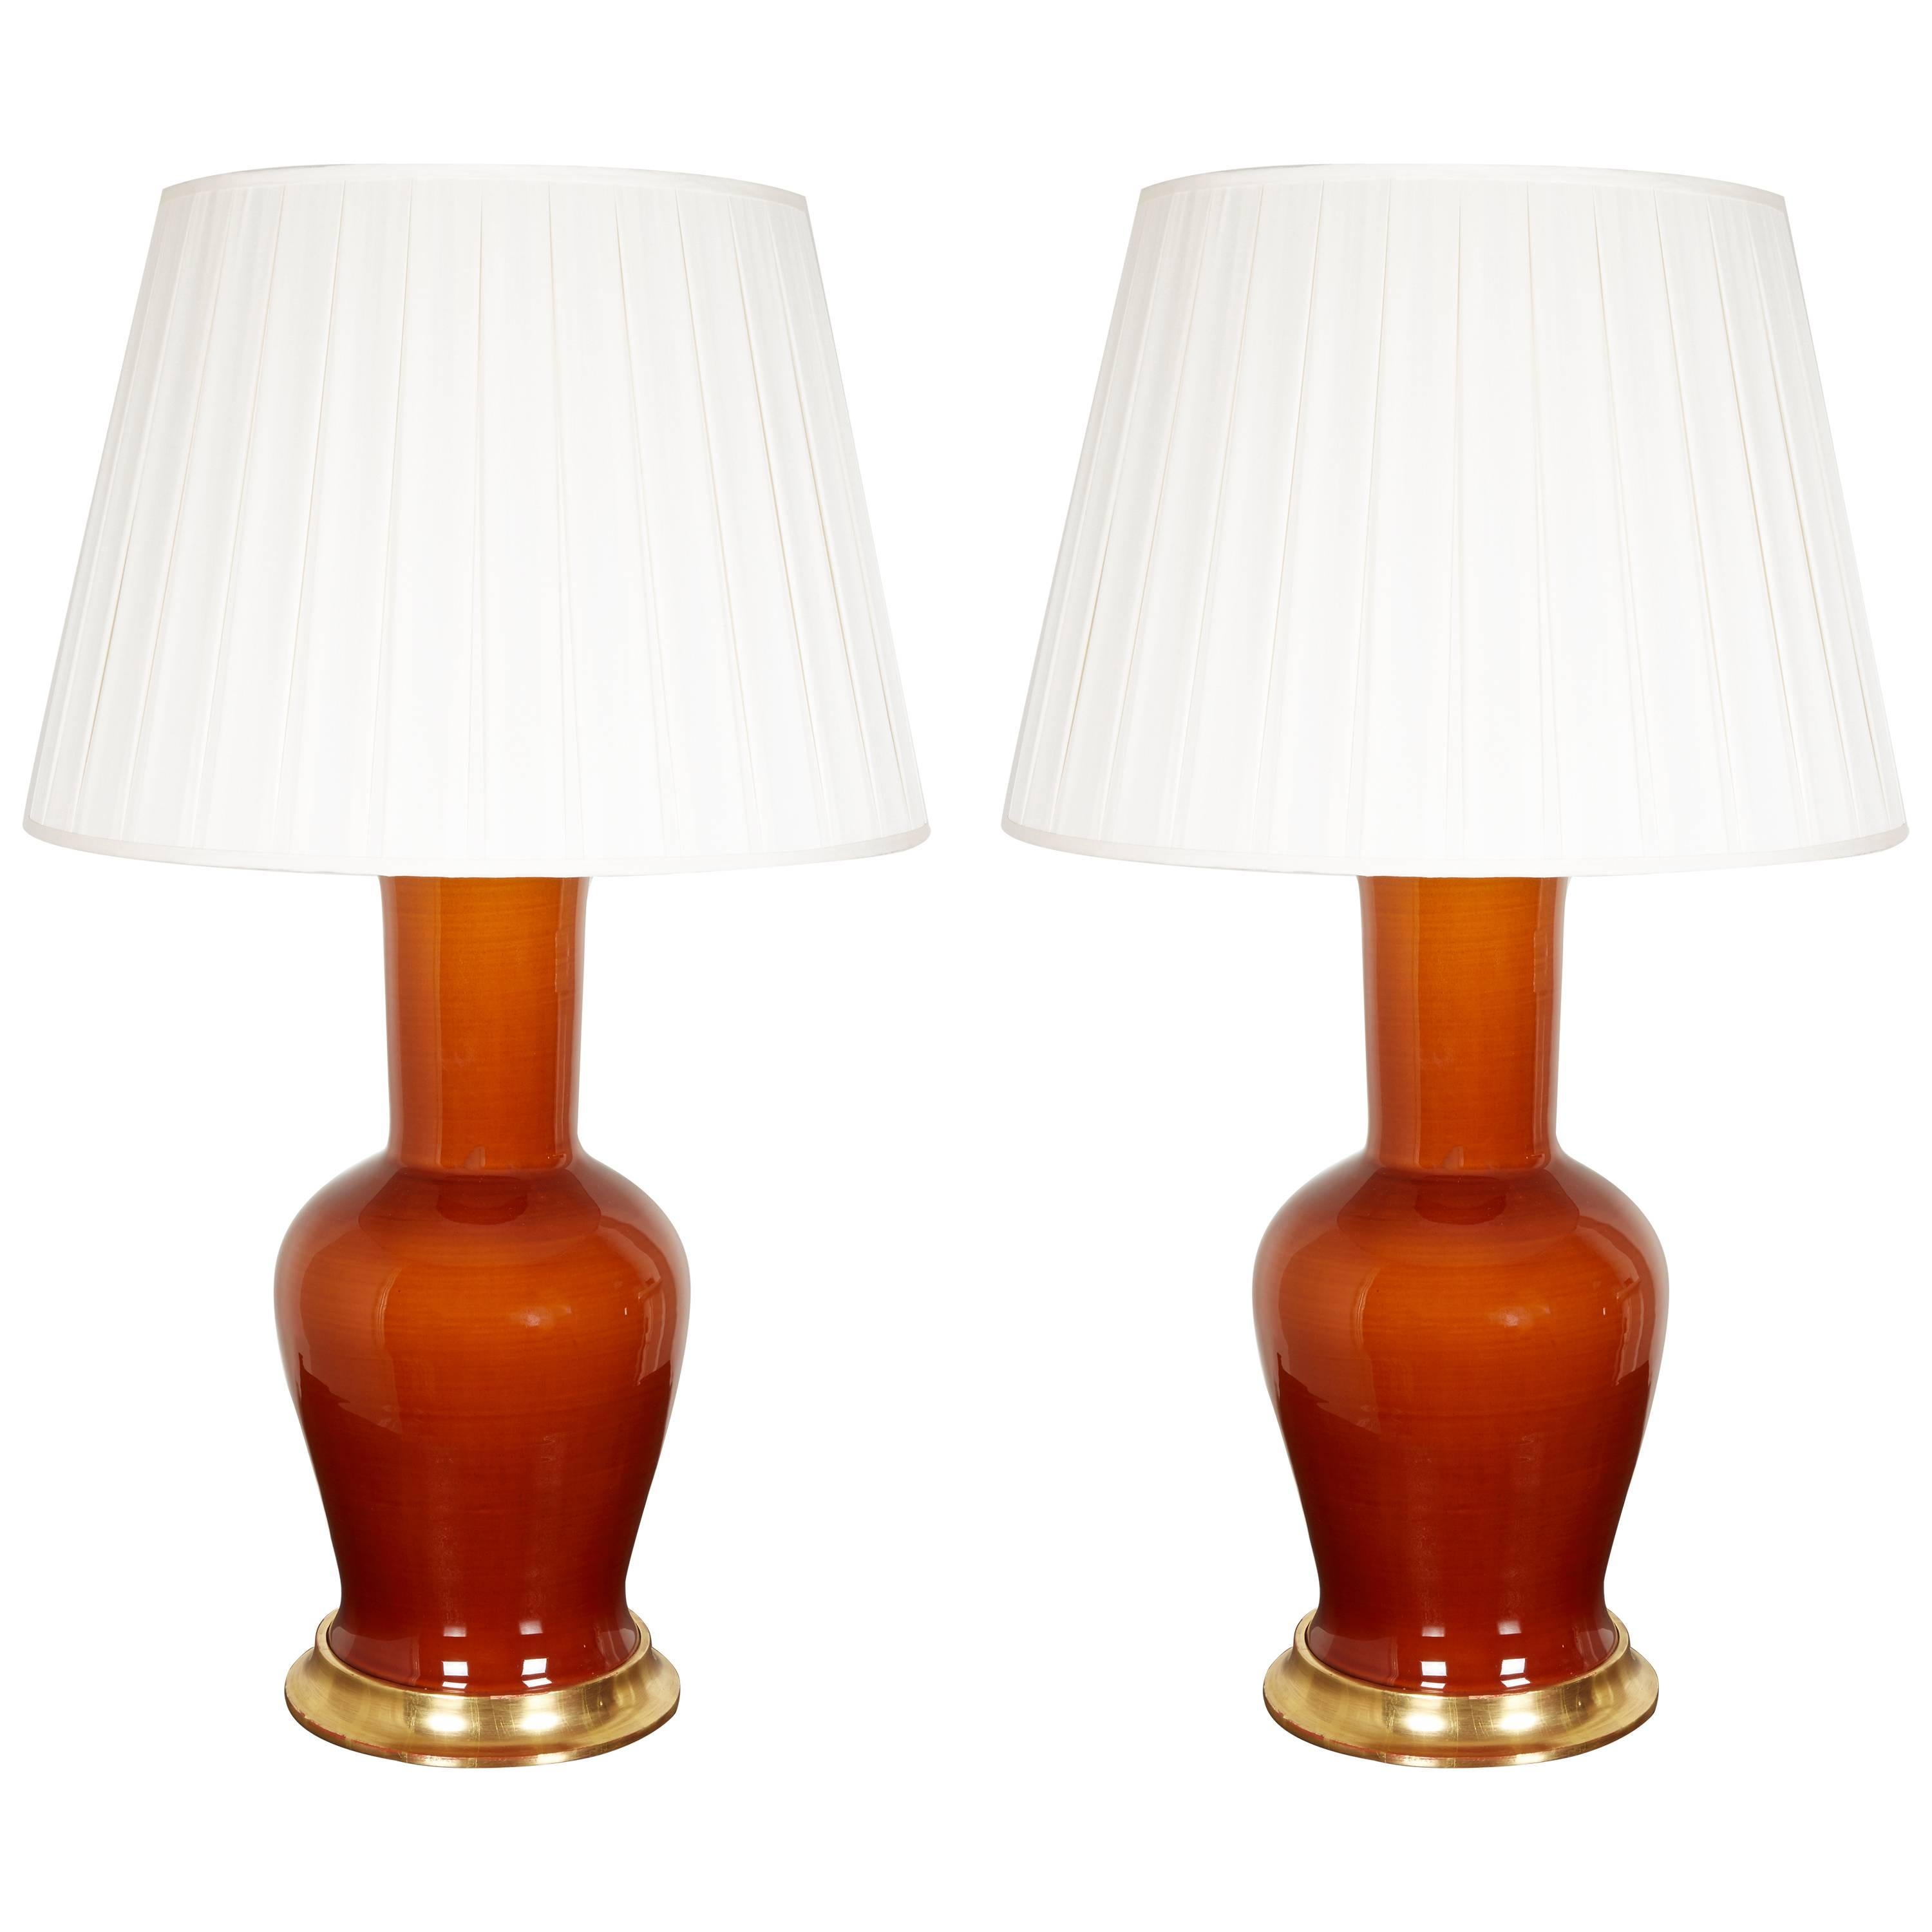 Pair of Christopher Spitzmiller "Garniture" Lamps in Amber